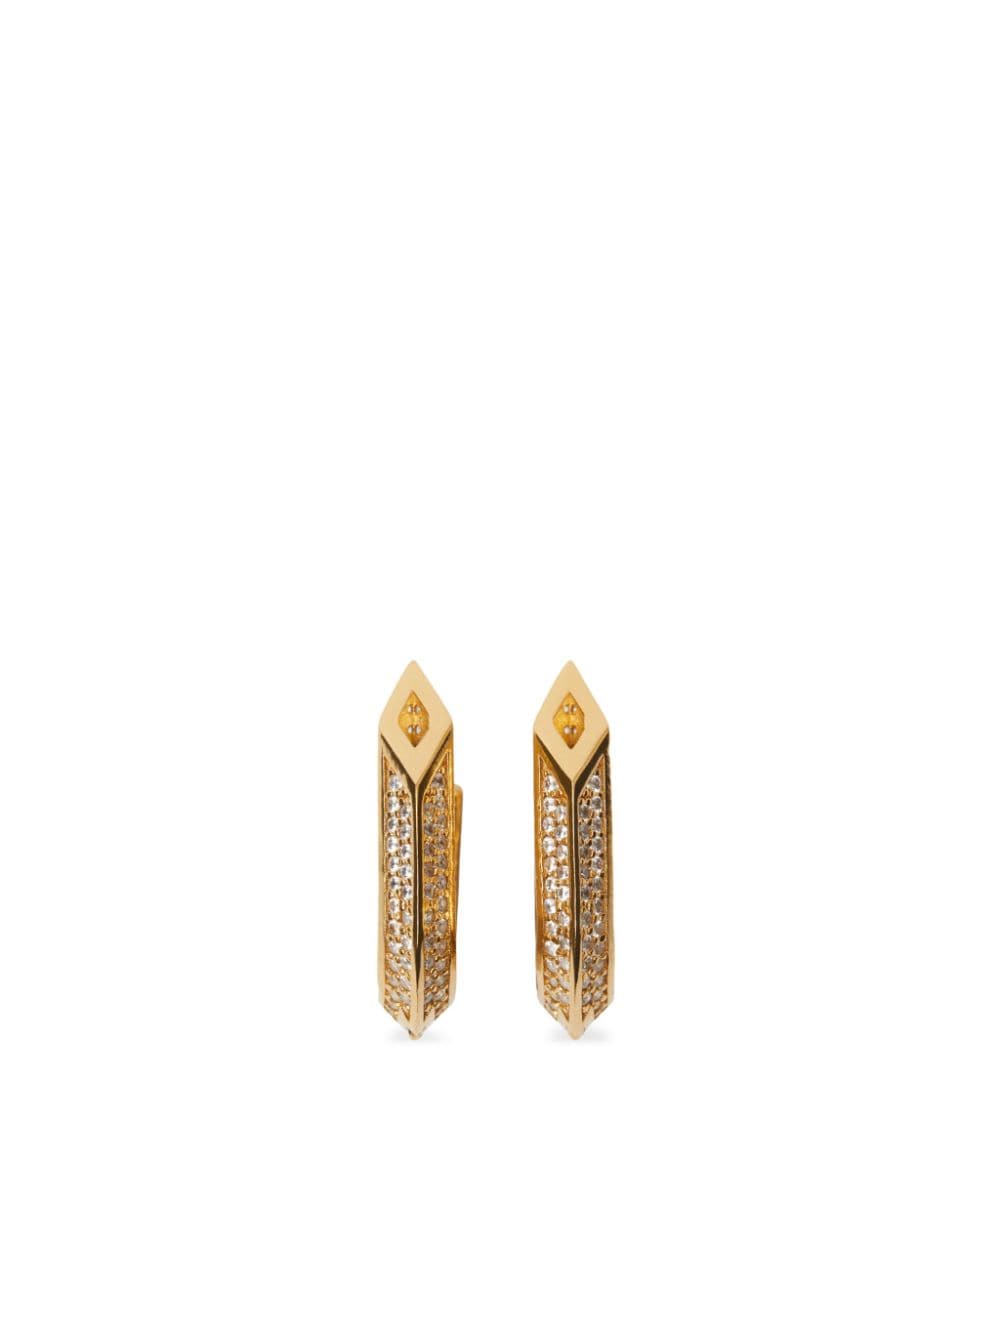 Burberry Klassische Ohrringe - Gold von Burberry